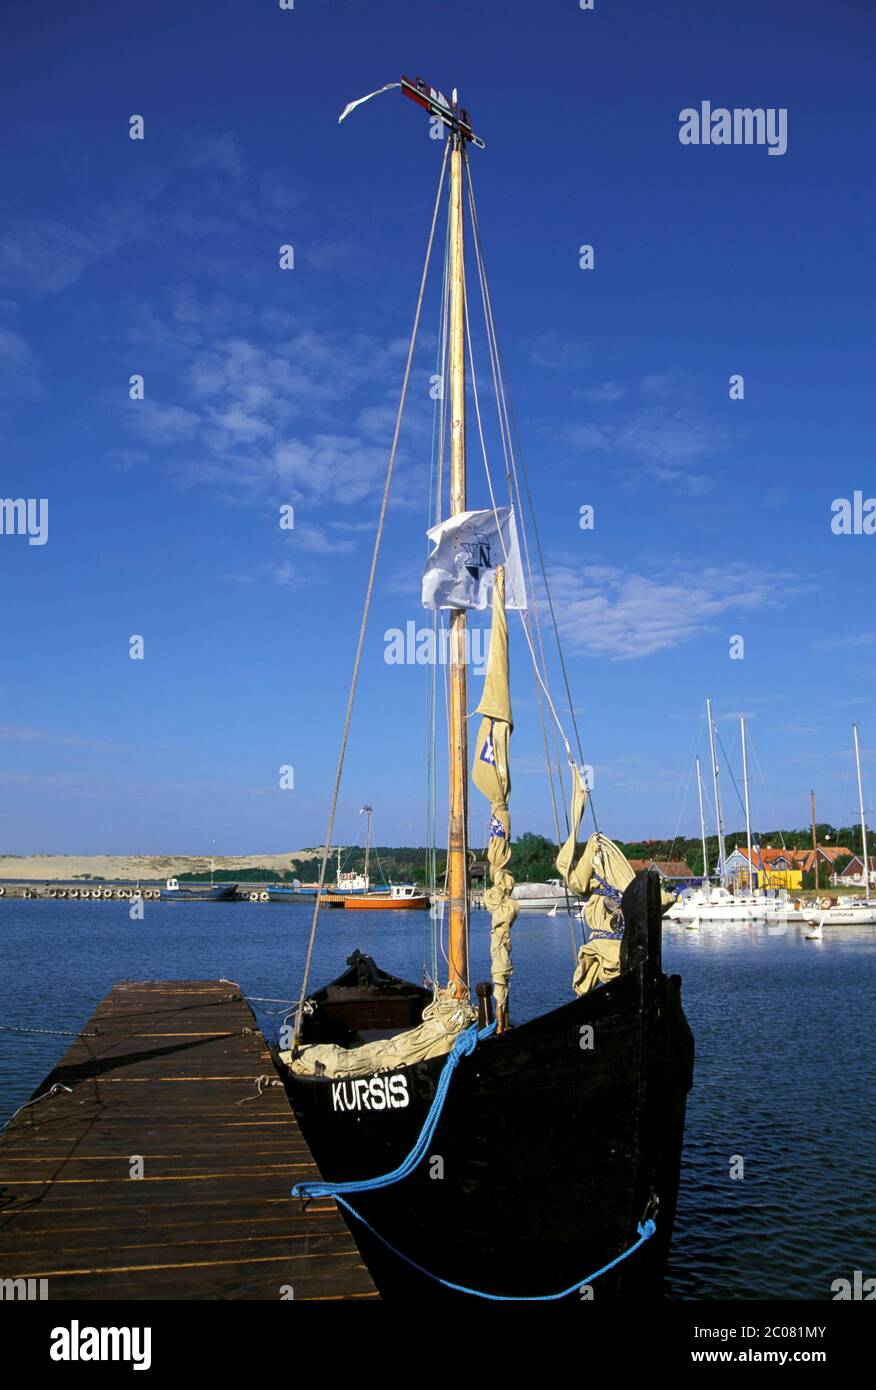 Tradtional ship Kursis in the harbour of Nida, Nidden, Kurische Nehrung, Curonian Spit, Lithuania, Baltics, Europe Stock Photo